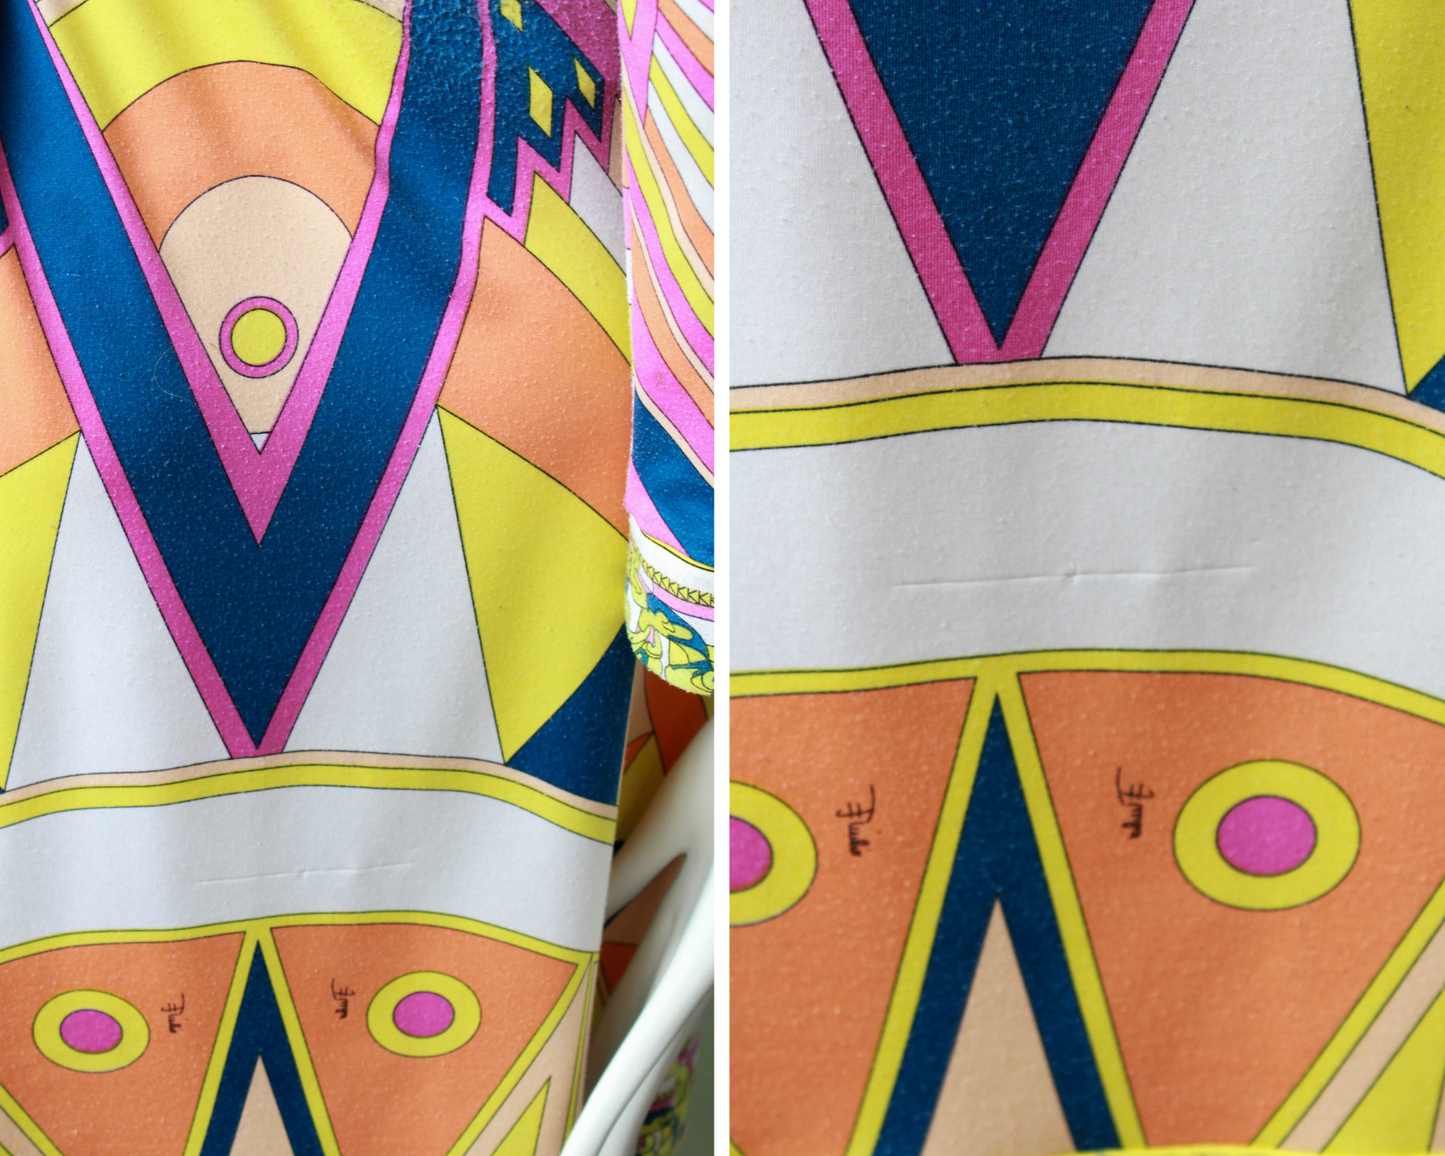 Emilio Pucci Patterned Silk Jersey Dress, Medium